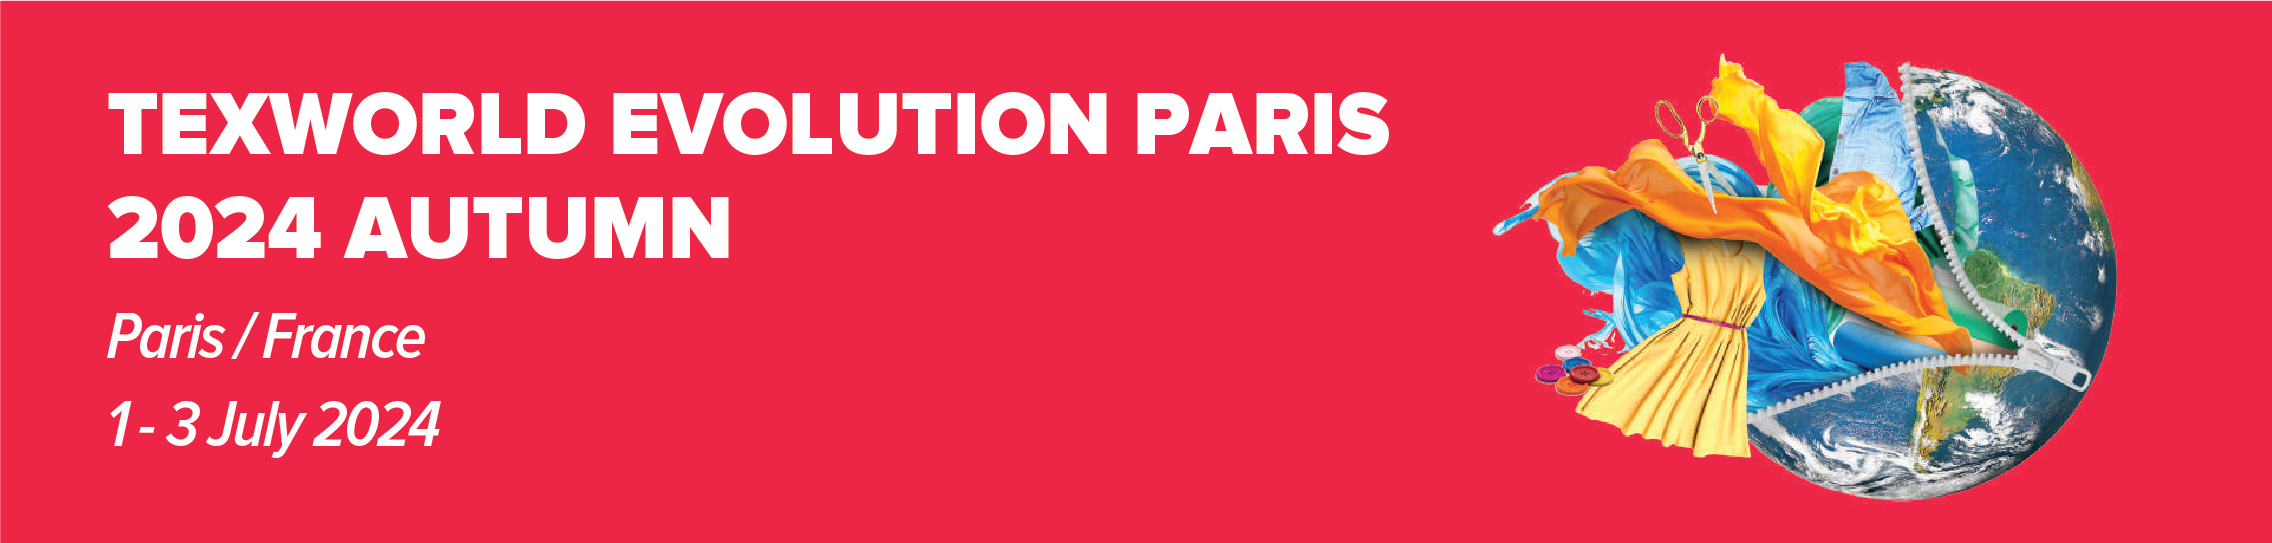 TEXWORLD EVOLUTION PARIS 2024 AUTUMN